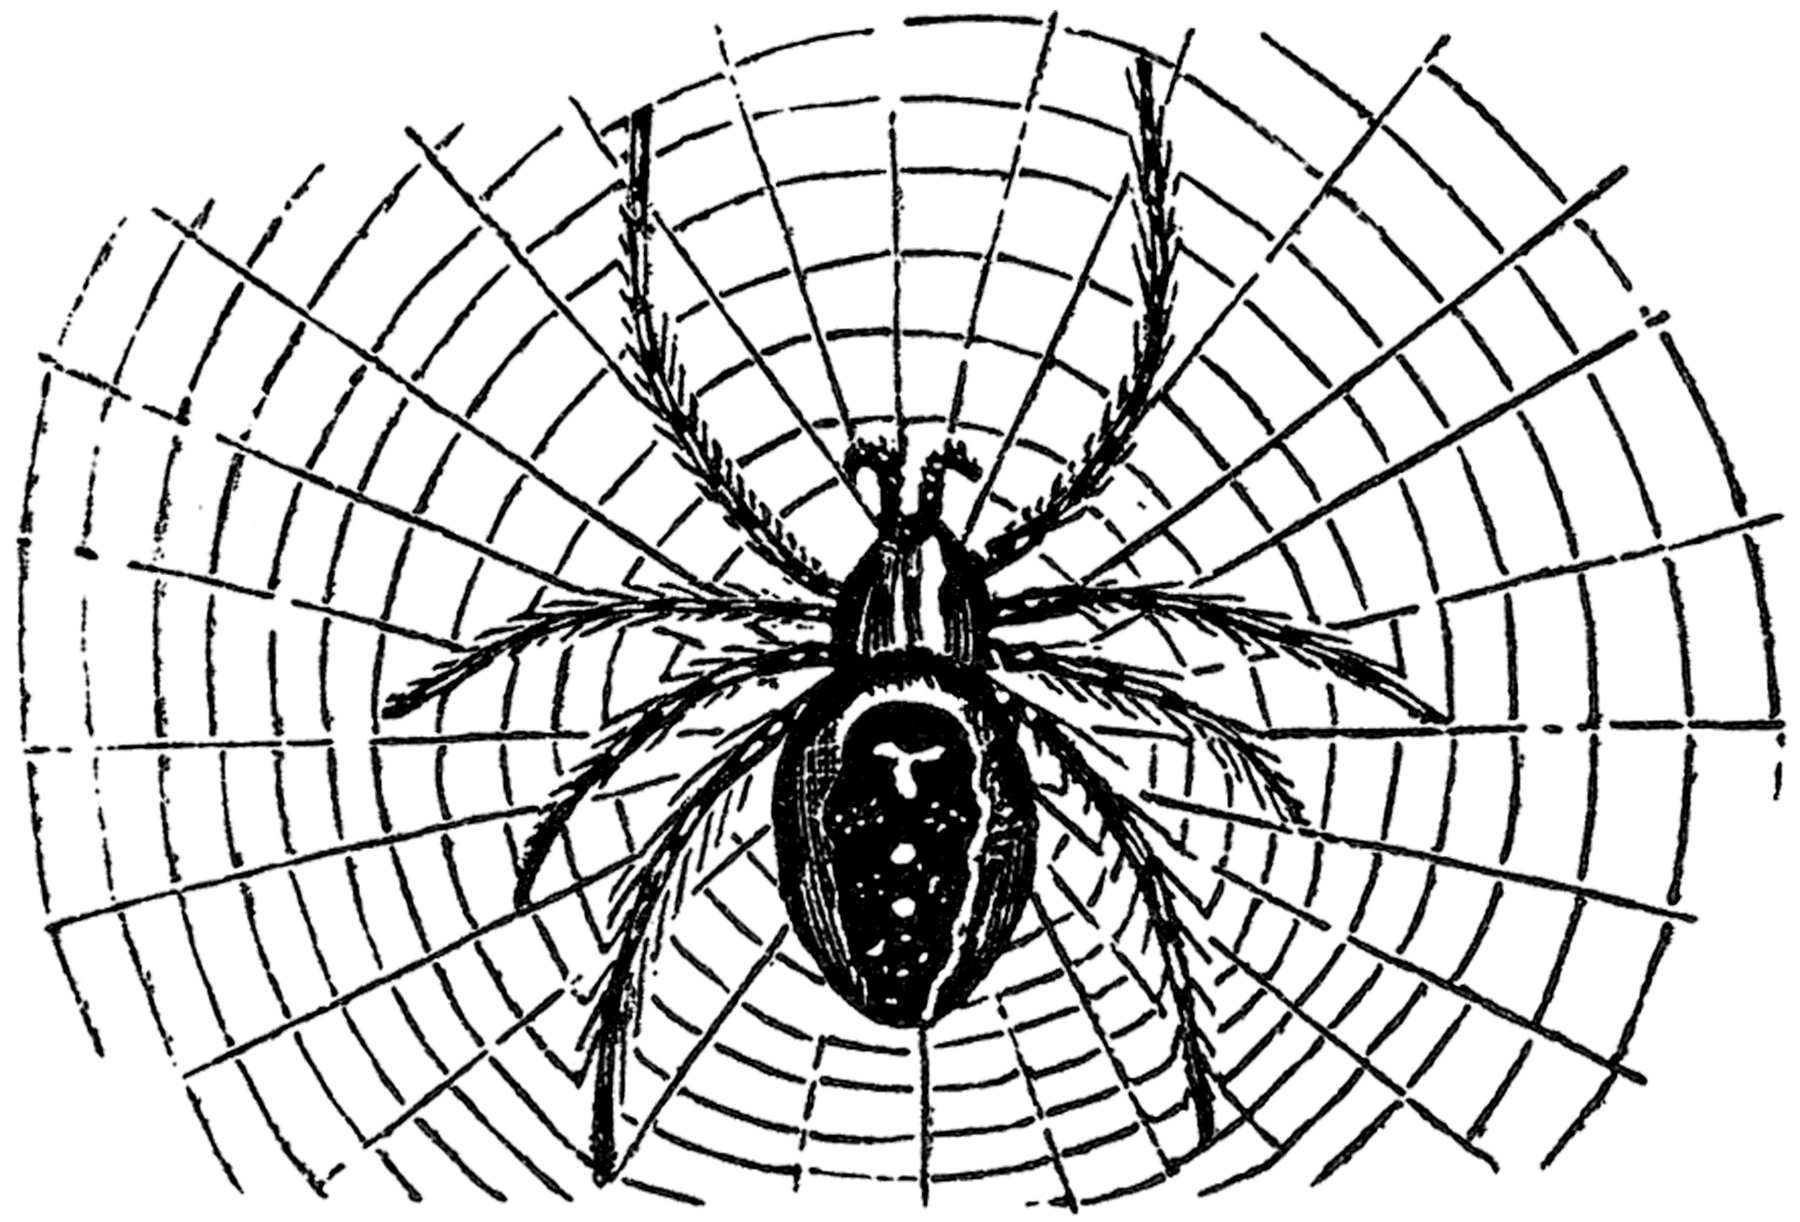 Vintage Halloween Spider Image - The Graphics Fairy